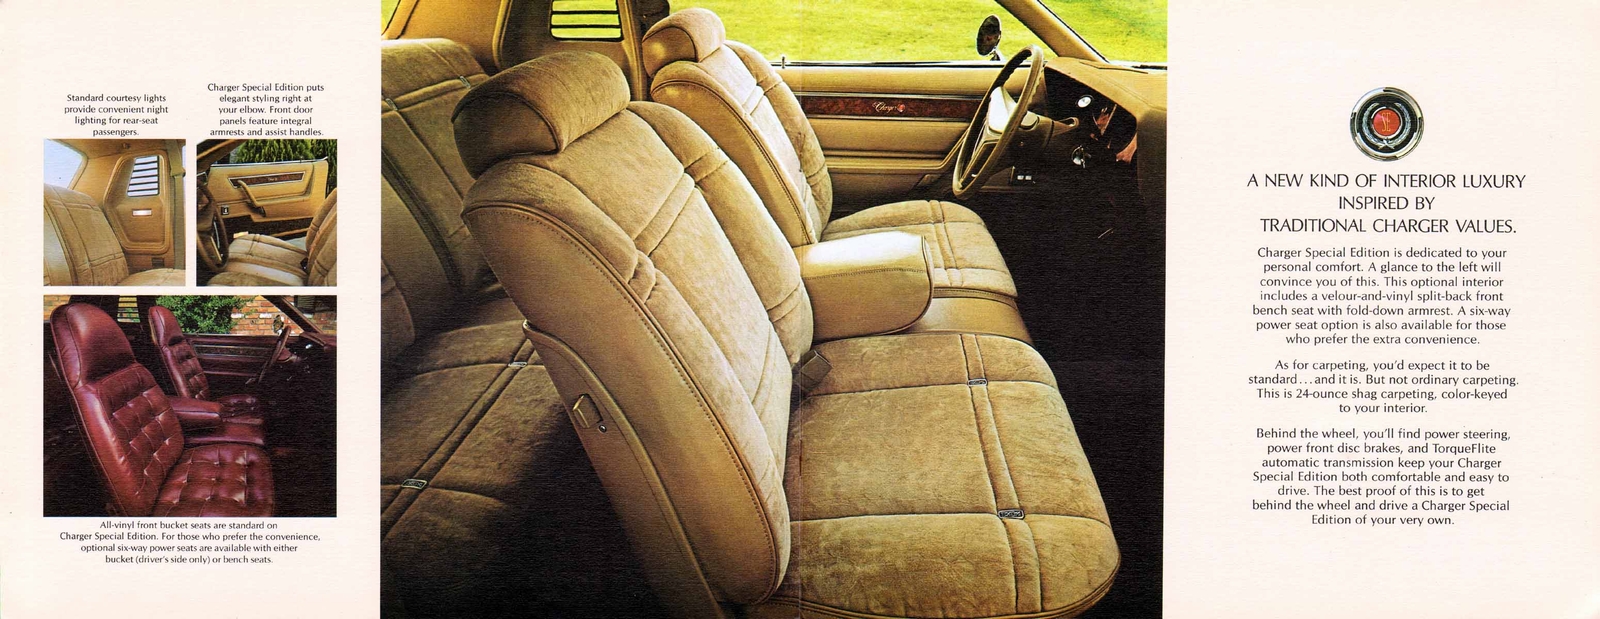 n_1975 Dodge Charger-04-05.jpg